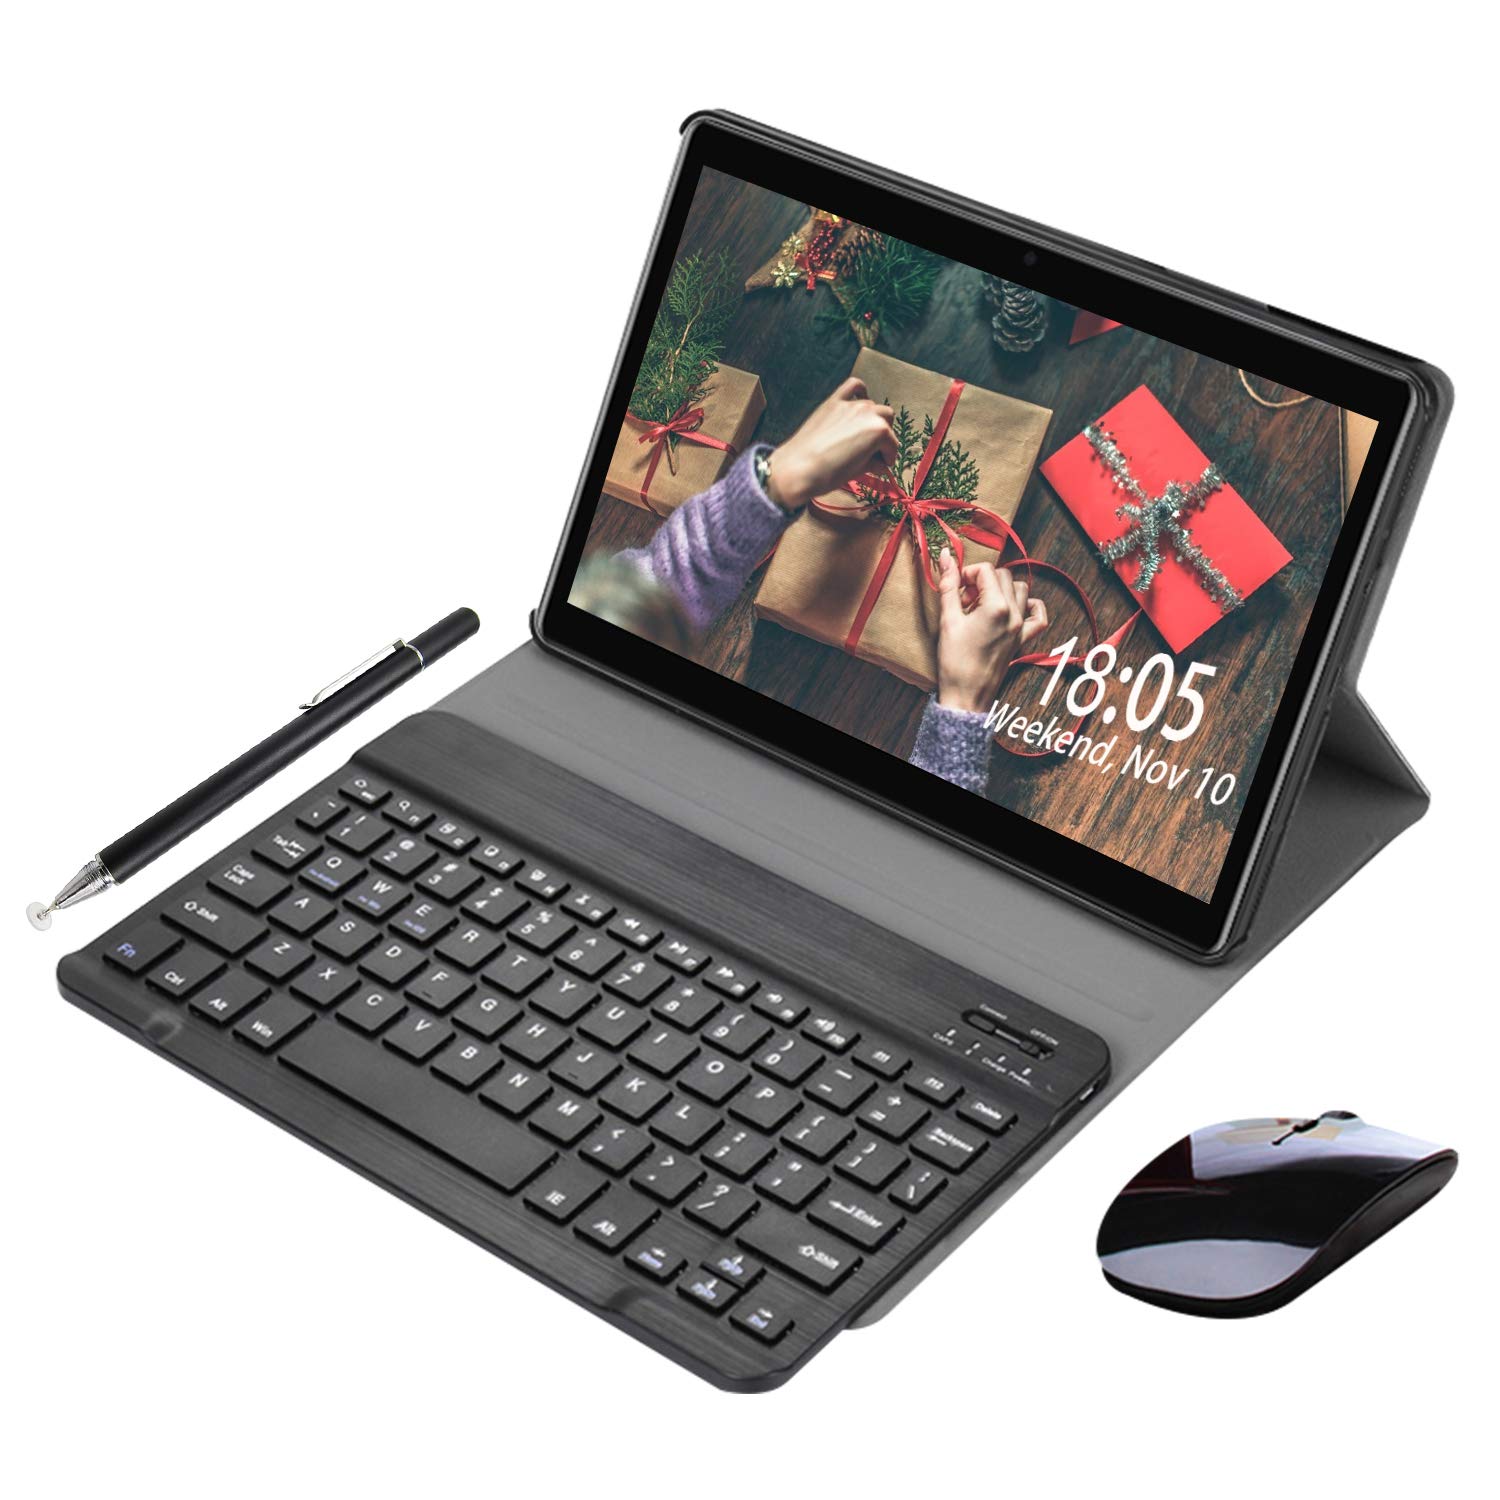 Best tablet under $150